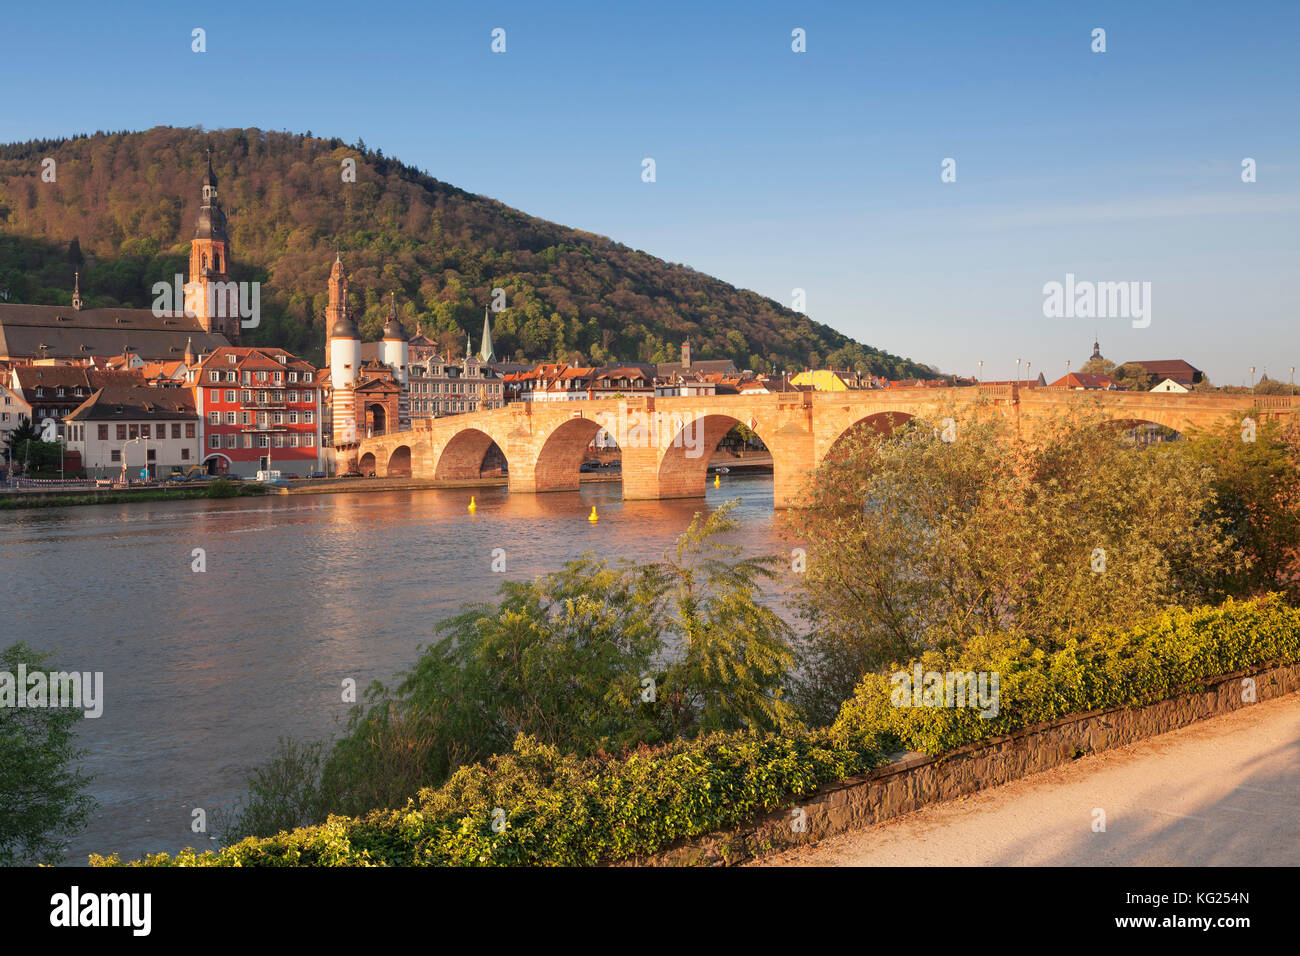 Vieille ville avec Karl-Theodor-Bridge (Vieux Pont), porte et église Heilig Geist, Heidelberg, Bade-Wurtemberg, Allemagne, Europe Banque D'Images